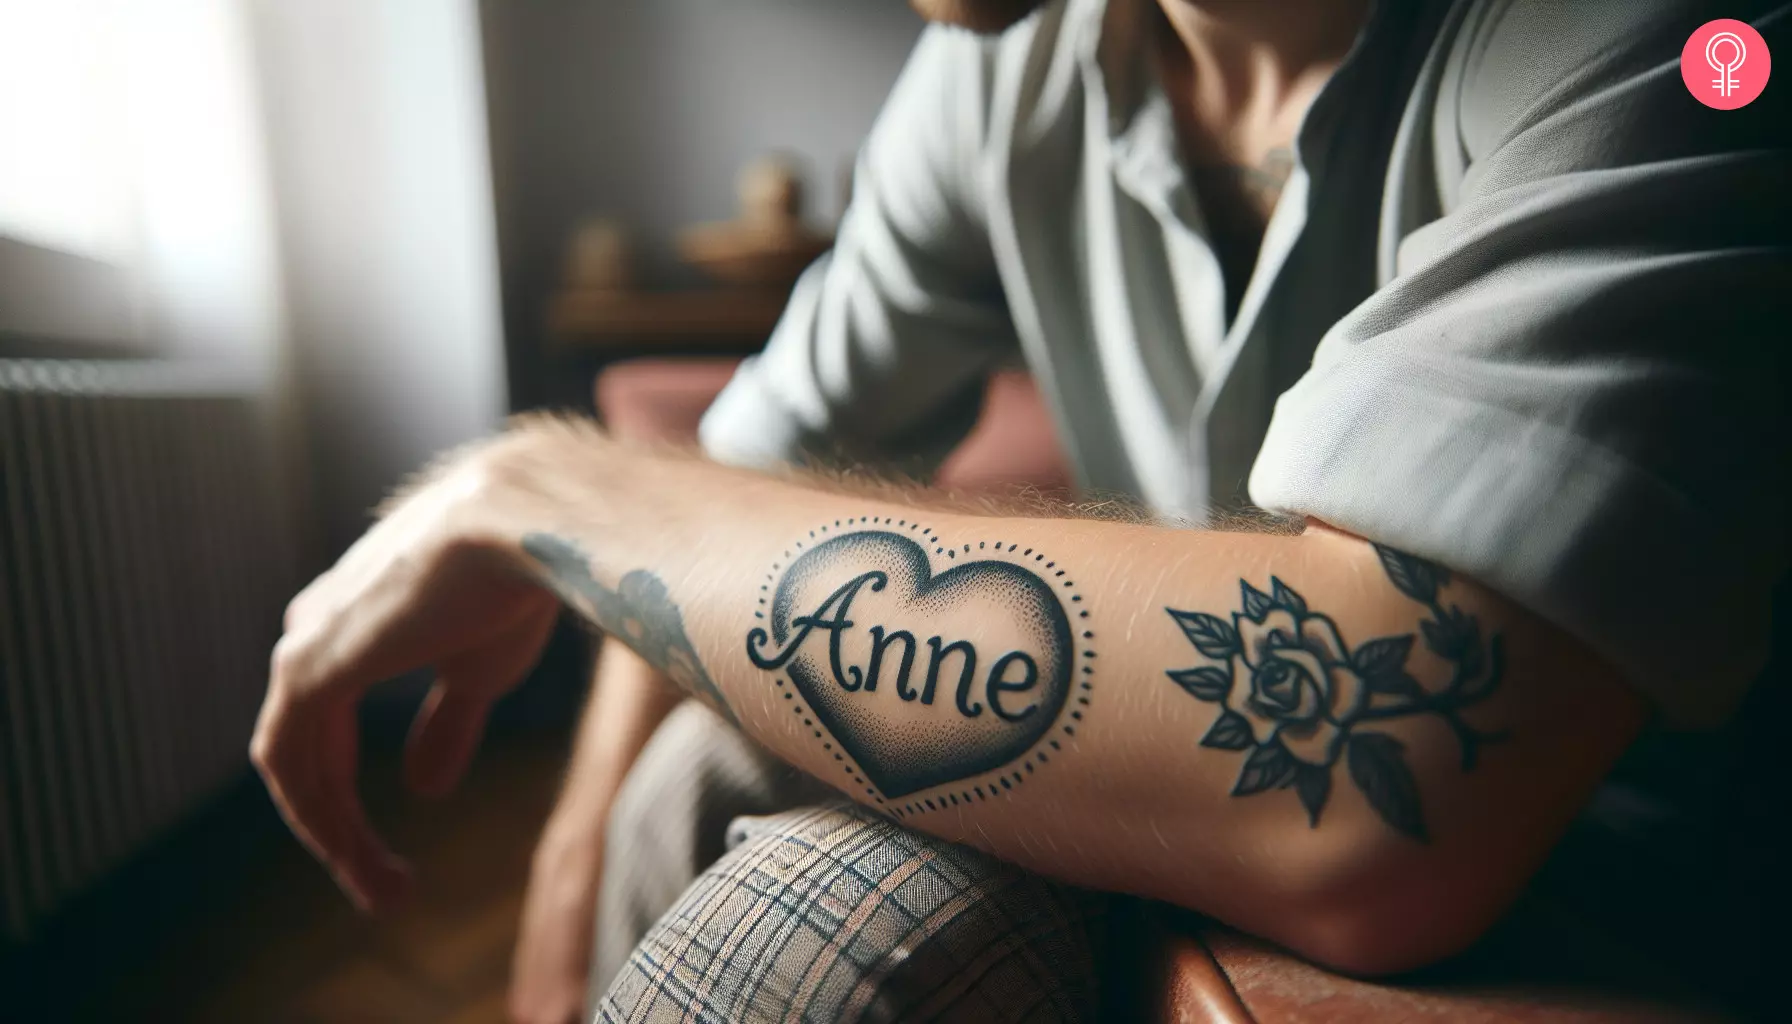 Love name tattoo on the forearm